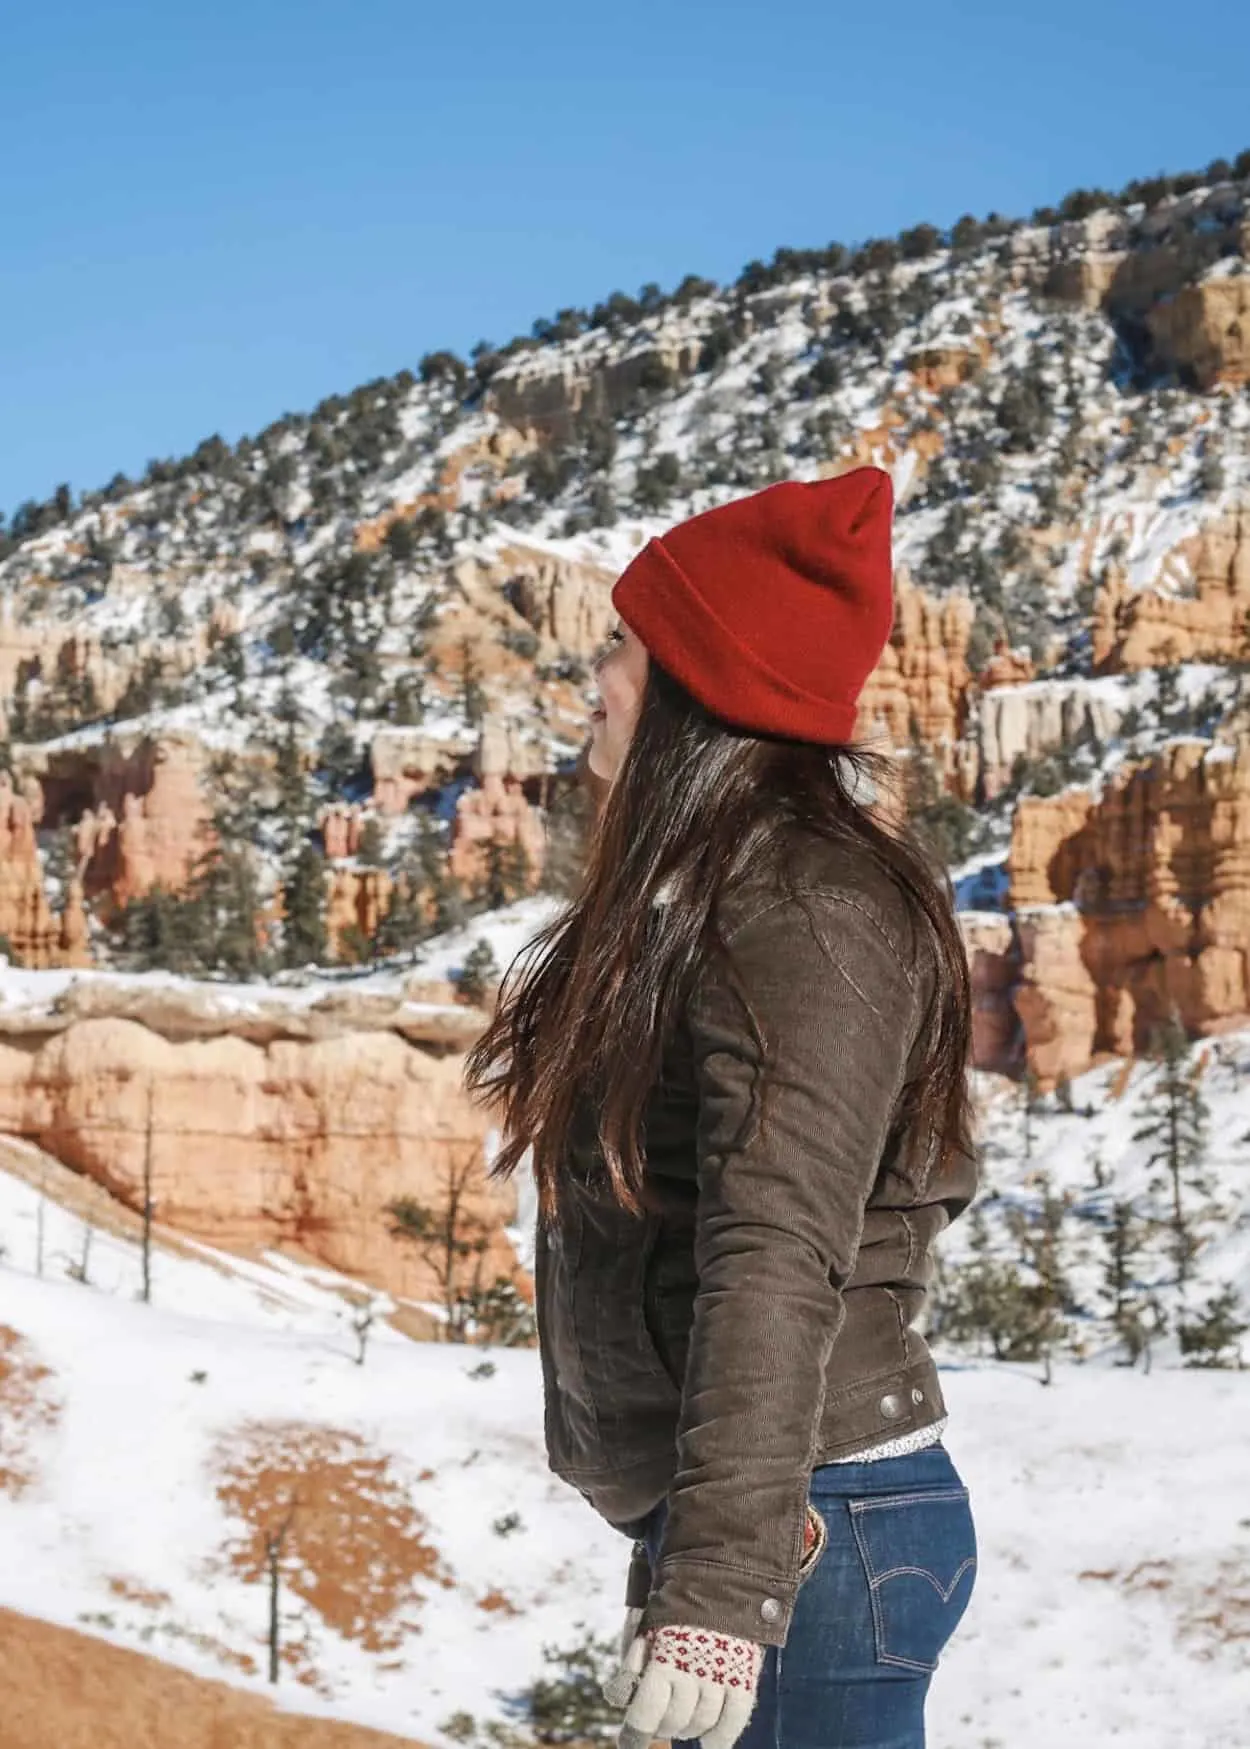 Views of Bryce Canyon National Park, Utah during the winter season